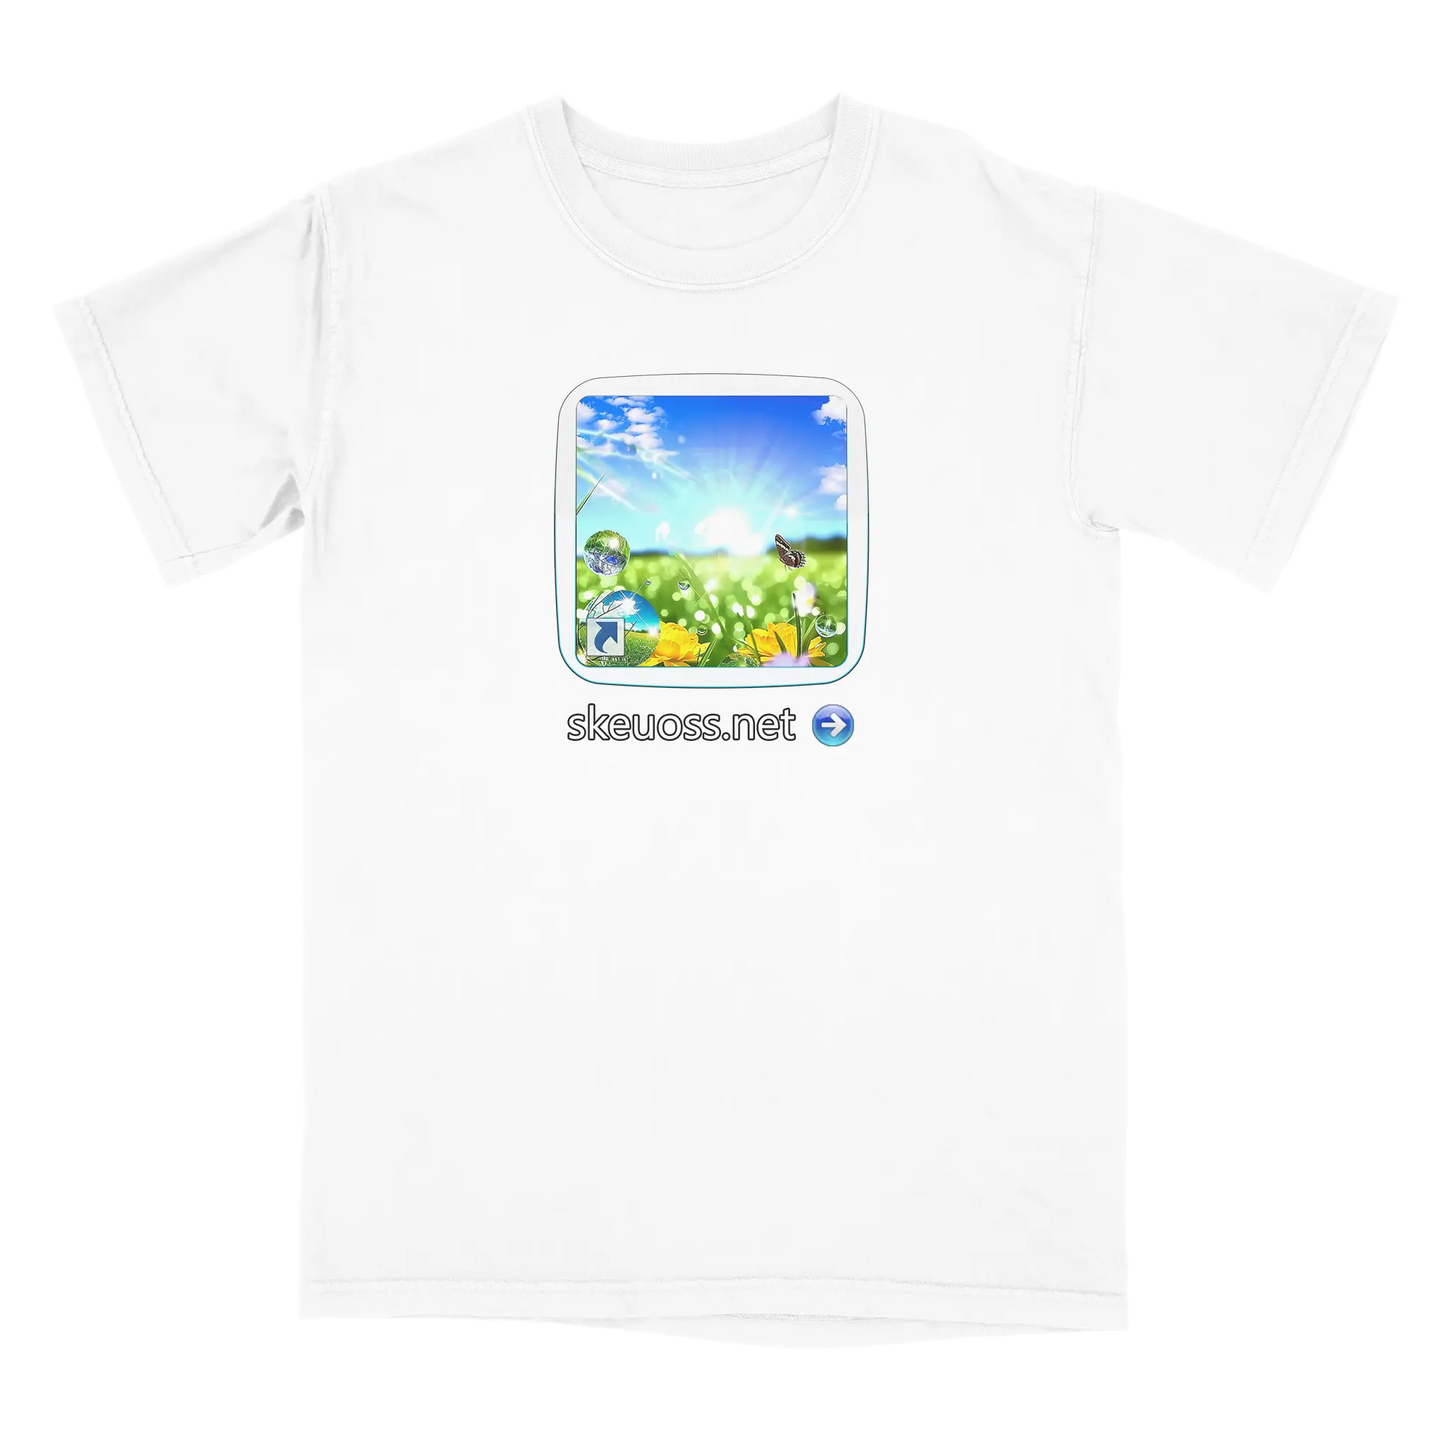 Frutiger Aero T-shirt - User Login Collection - User 271